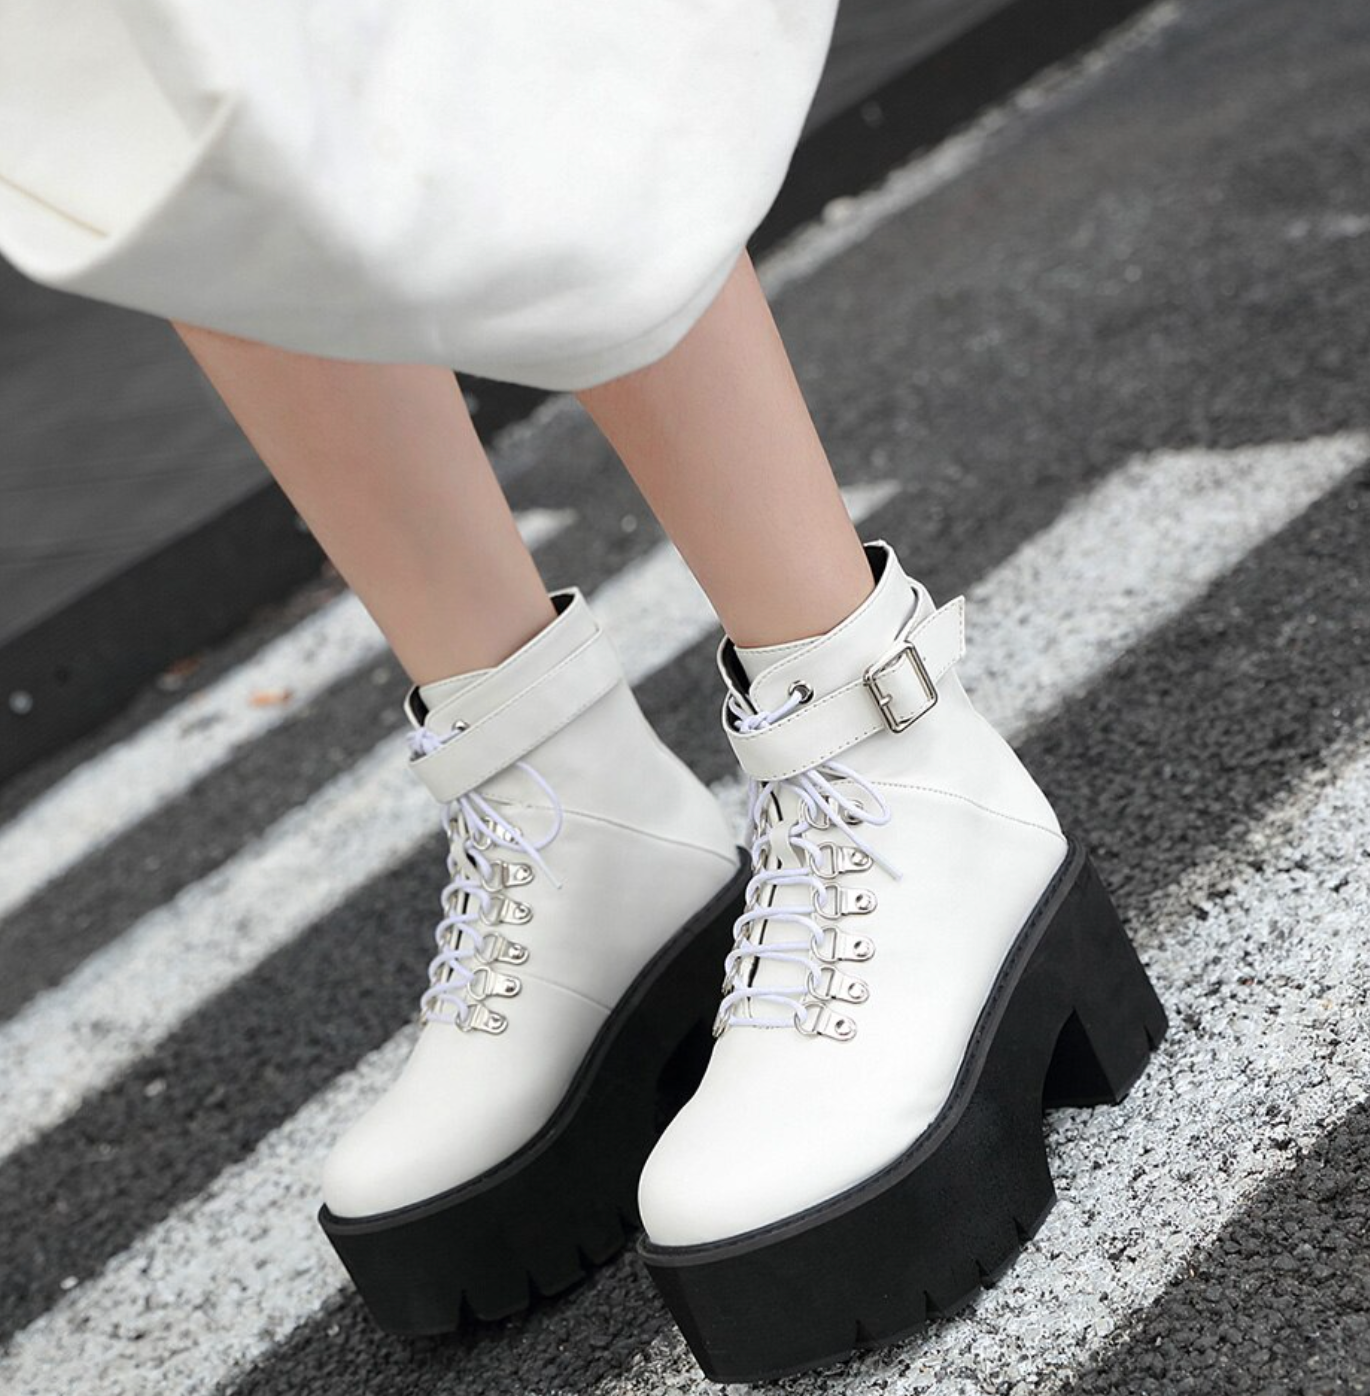 White Chunky Heels Chain Boots